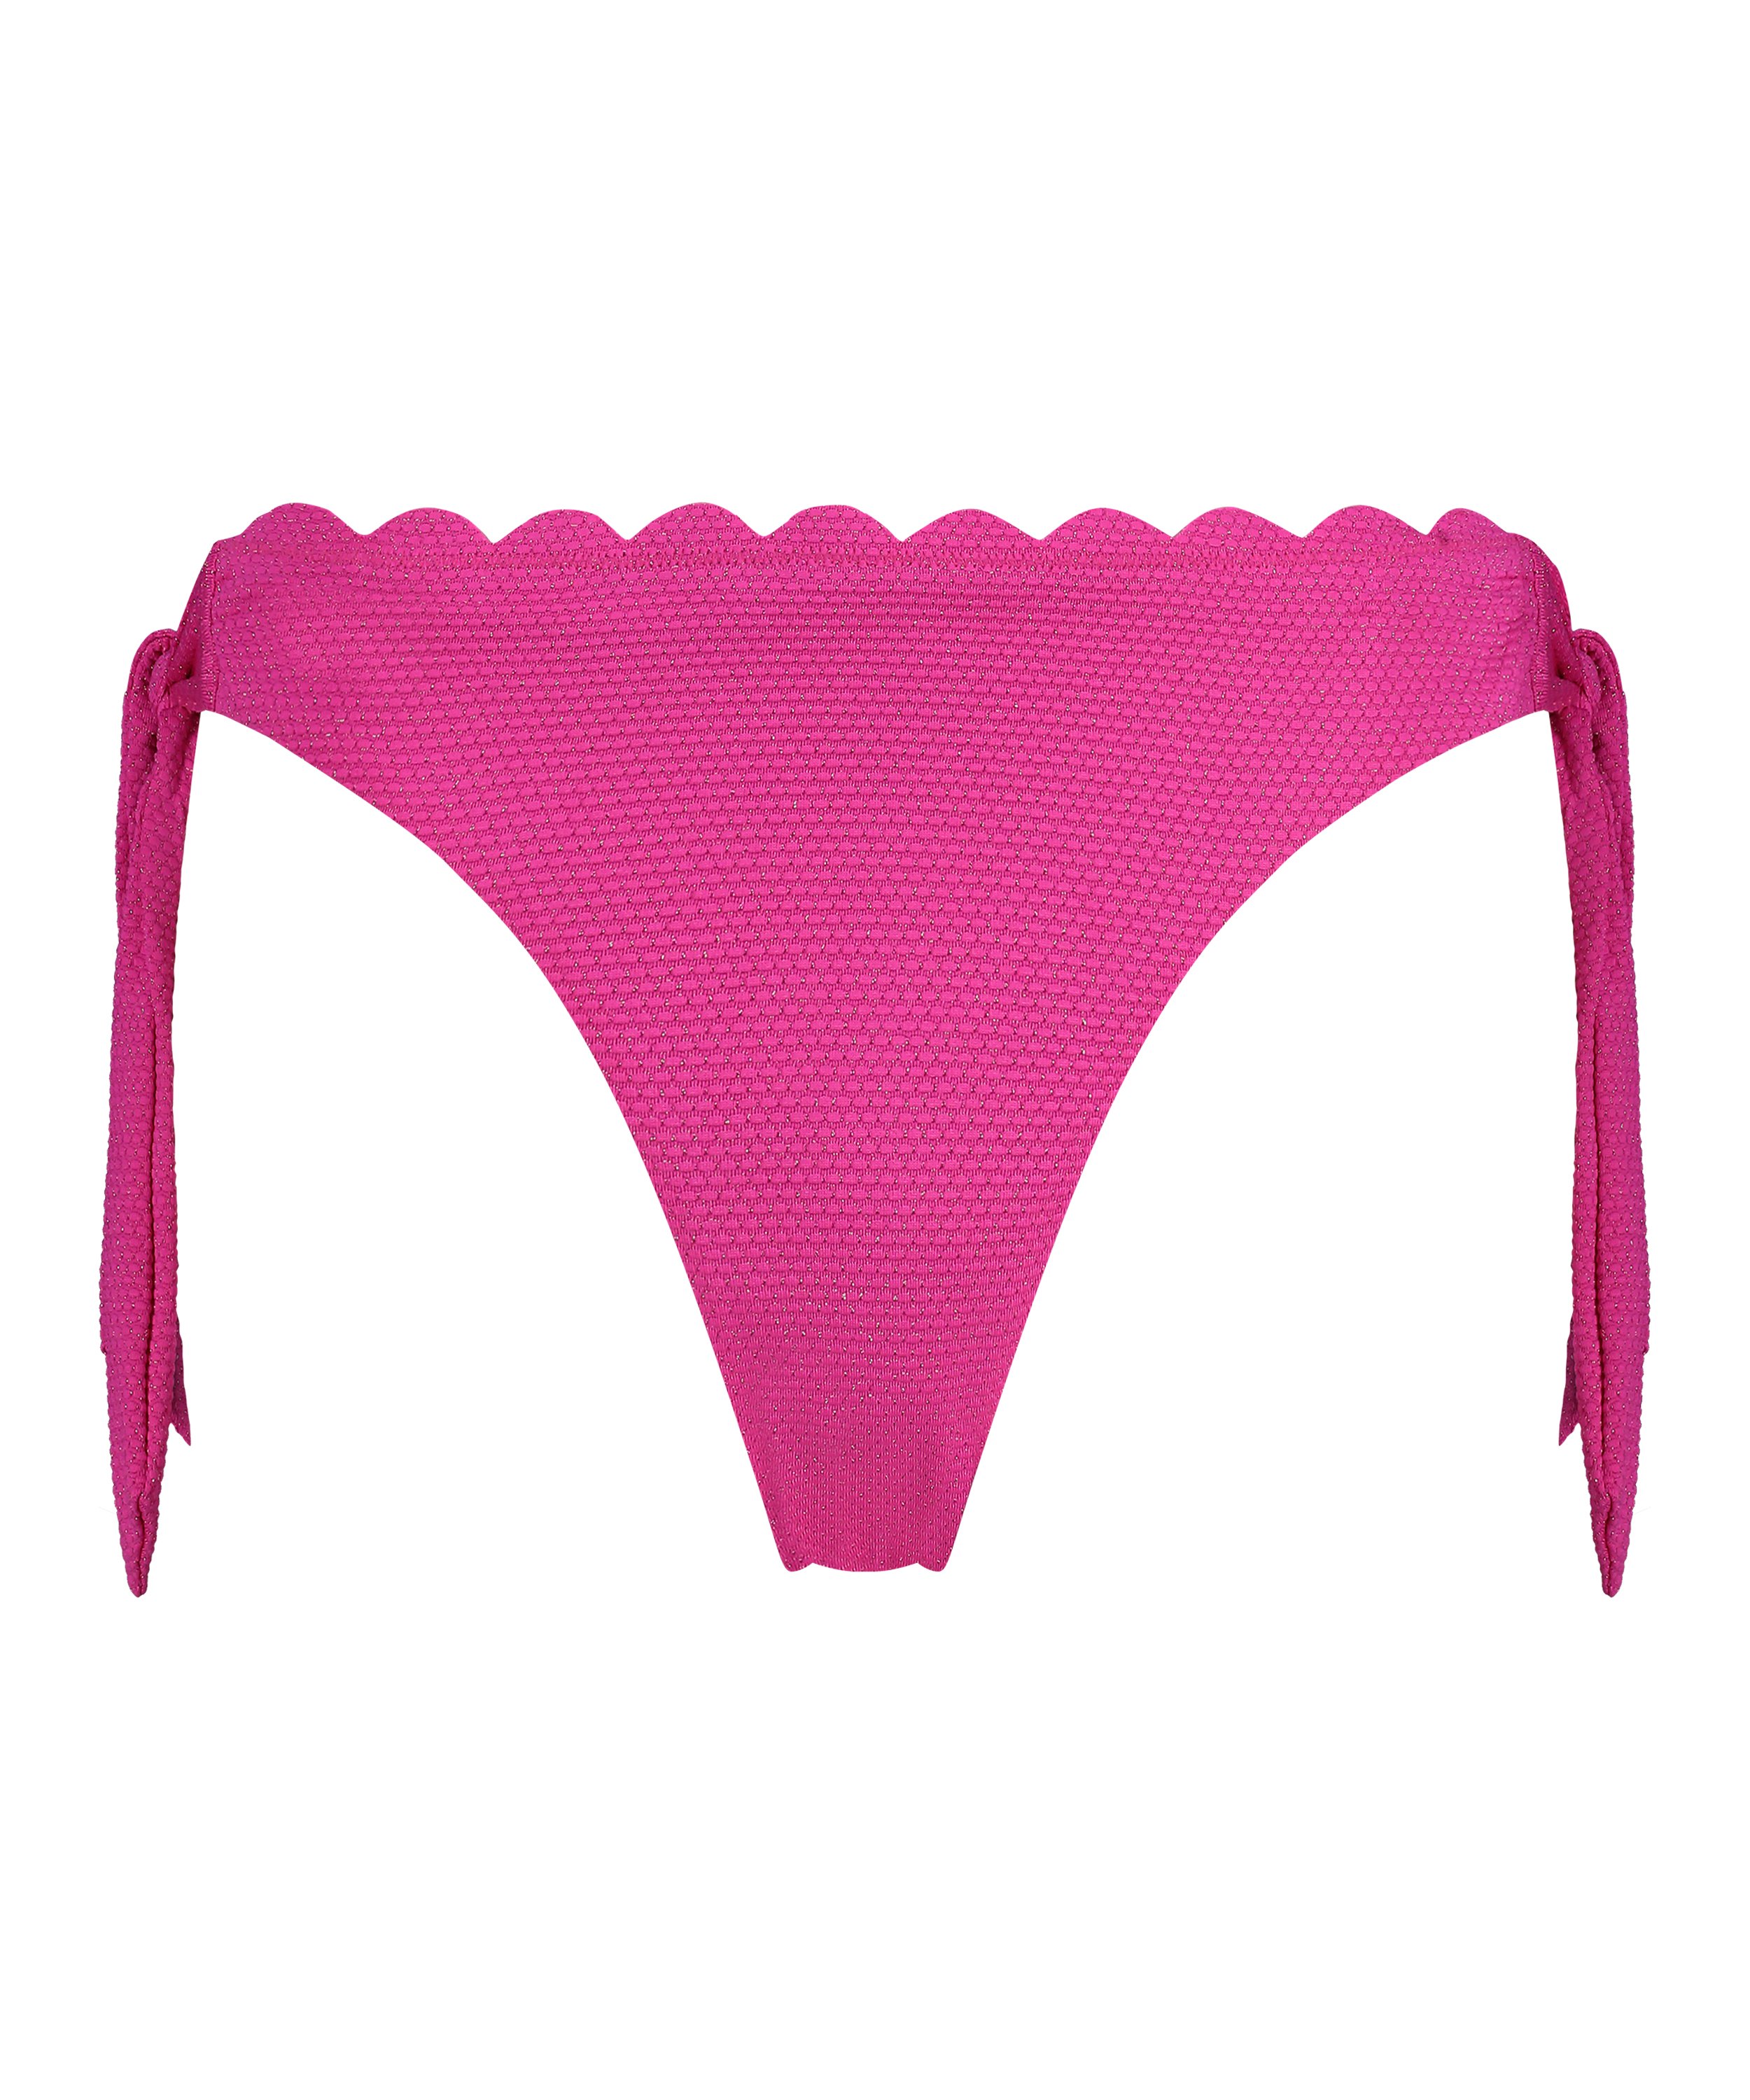 Scallop Lurex Bikini Bottoms, Pink, main